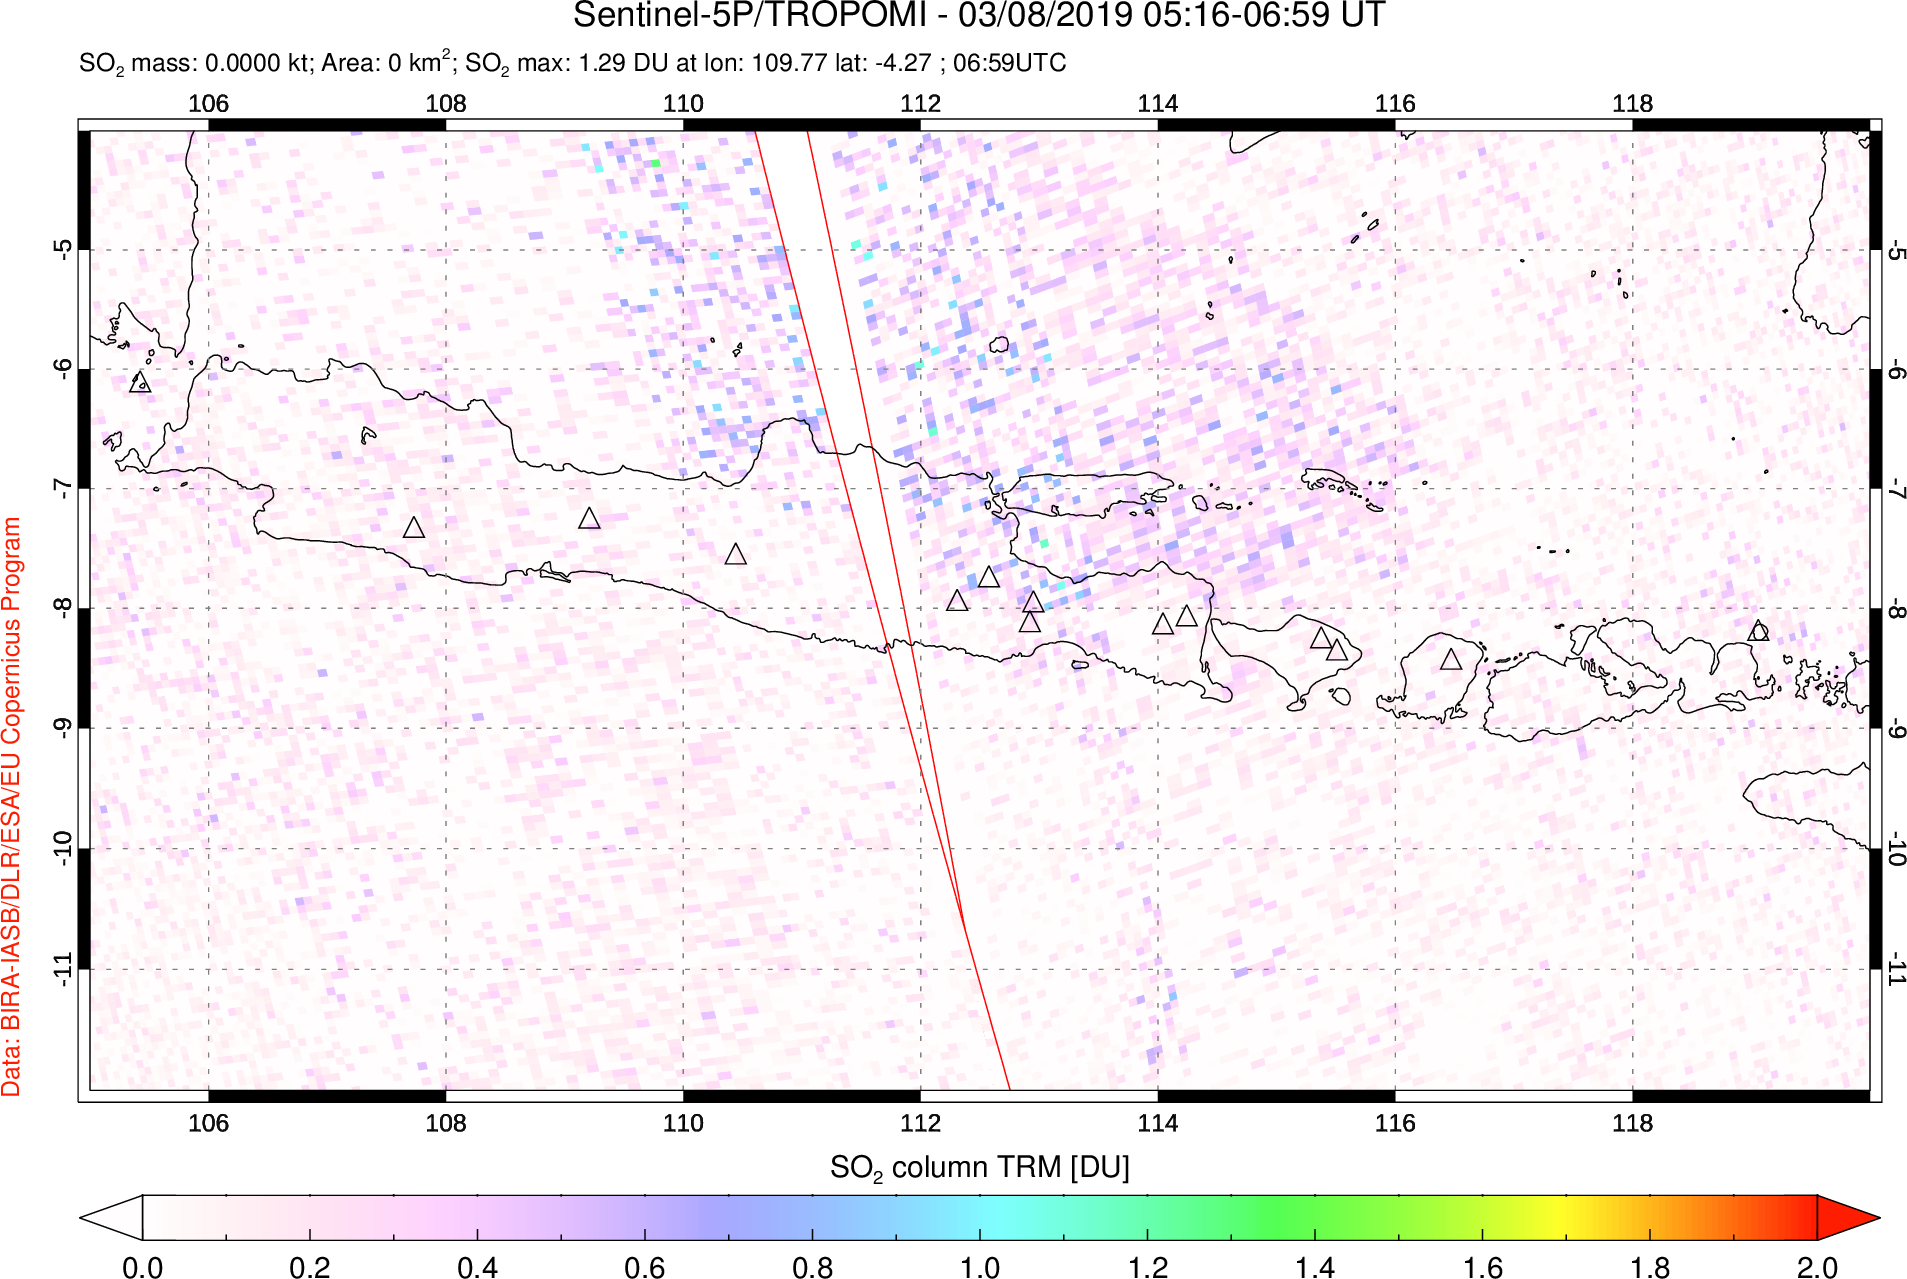 A sulfur dioxide image over Java, Indonesia on Mar 08, 2019.